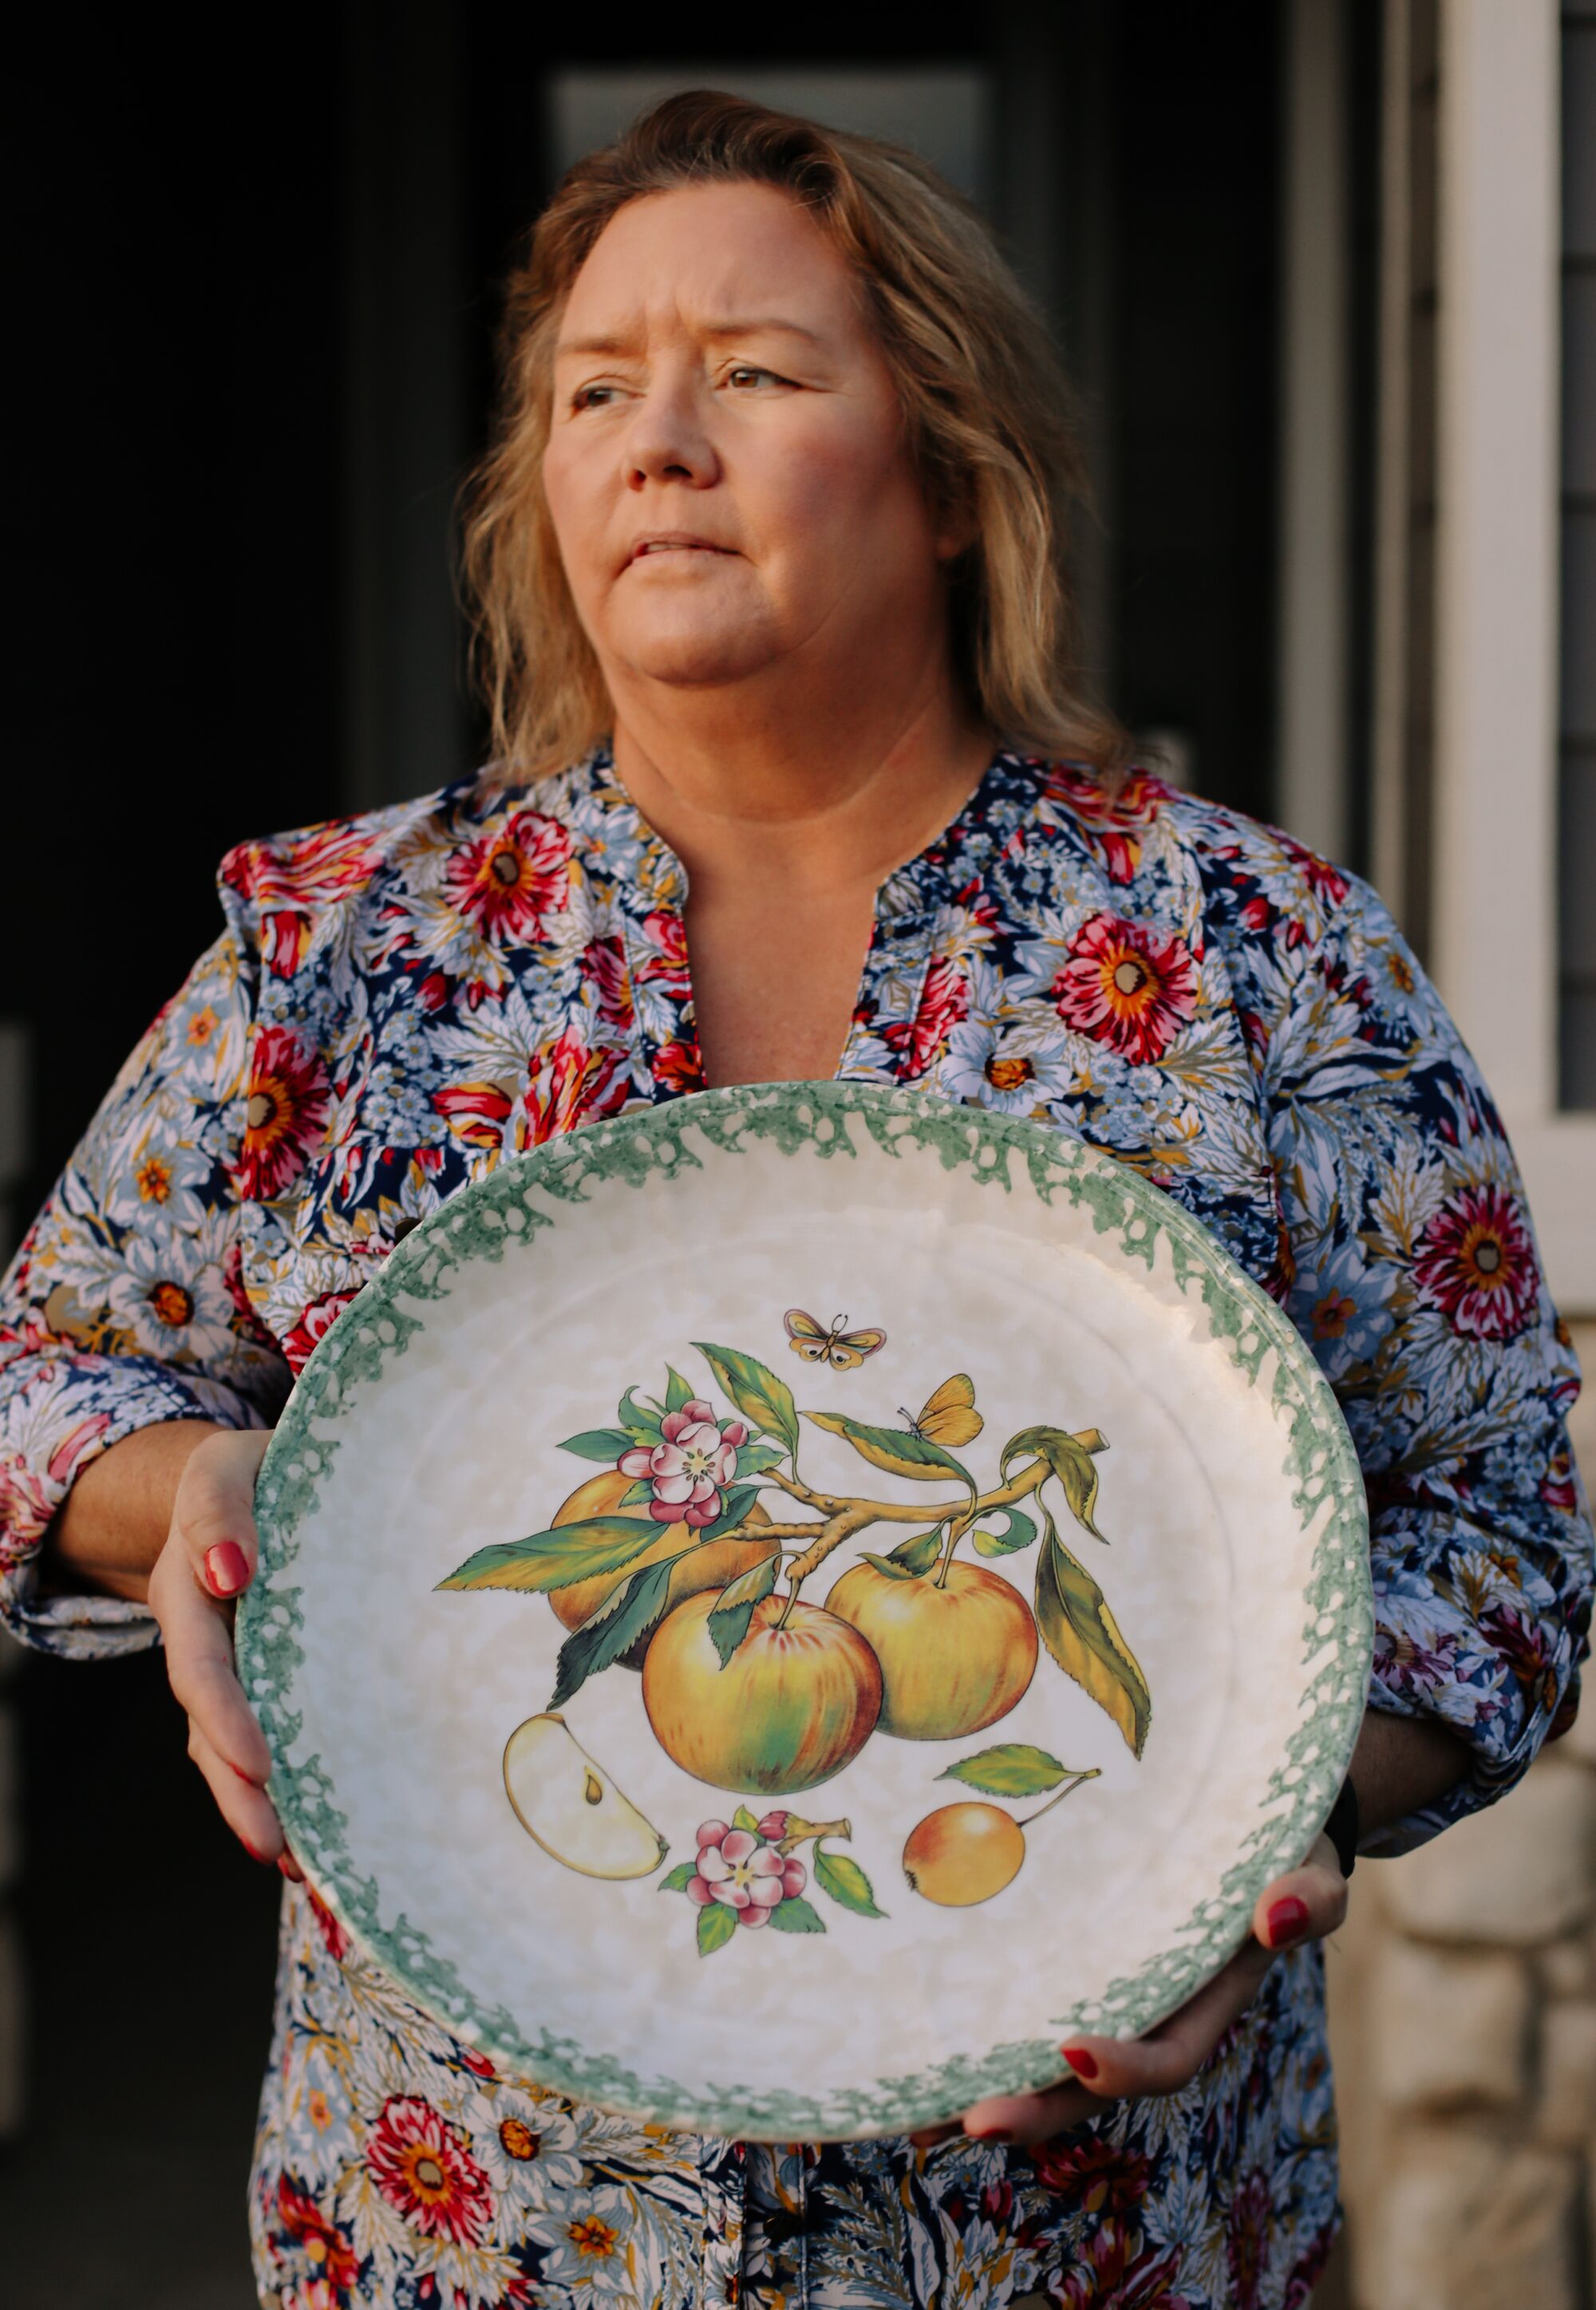 A woman holds a platter for a portrait